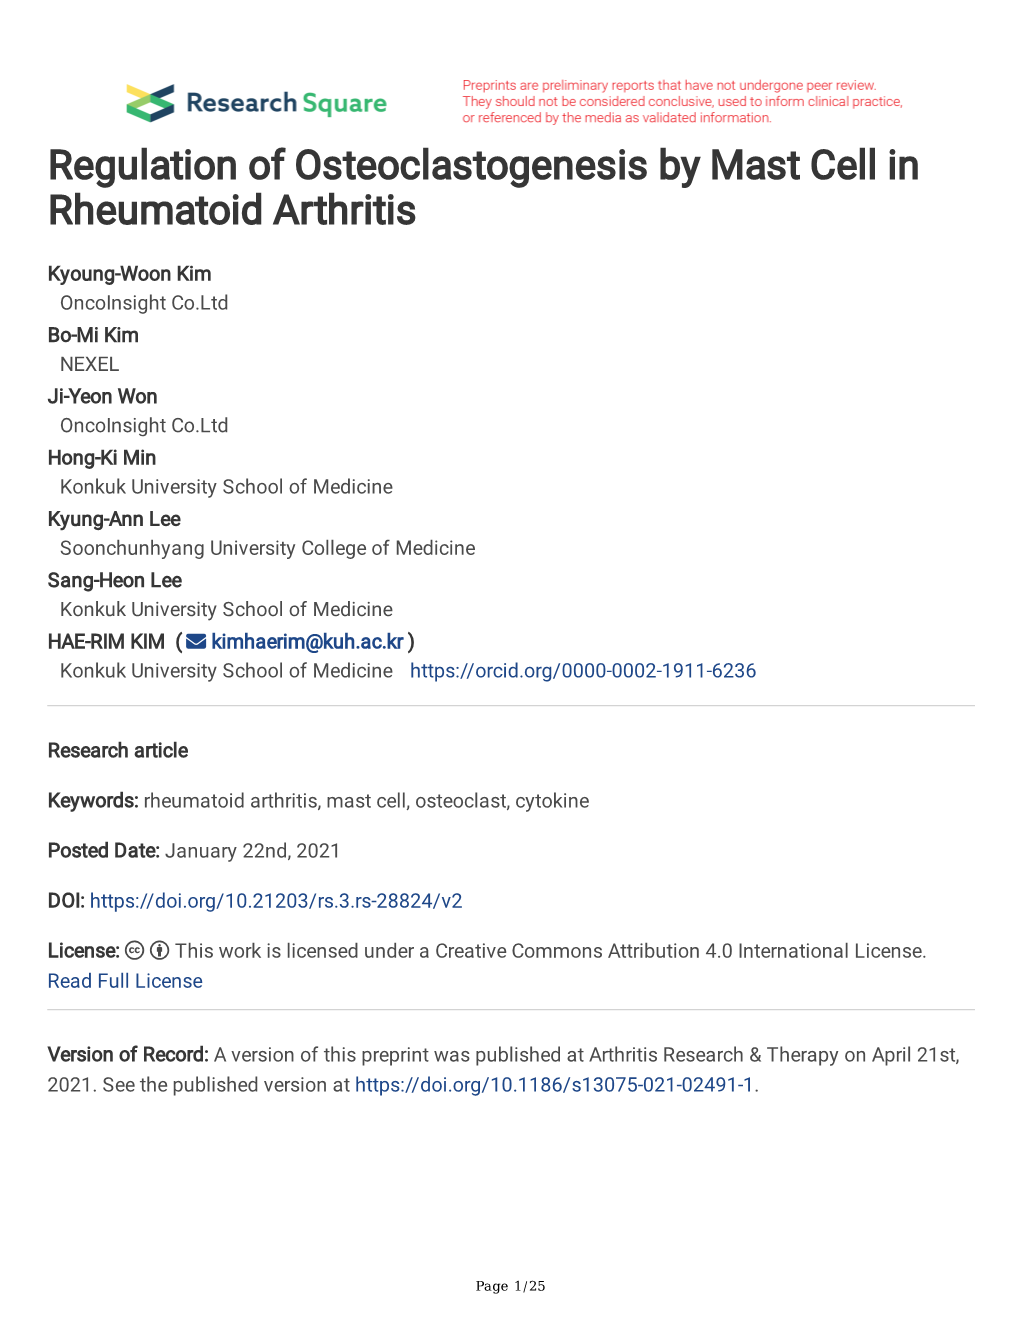 Regulation of Osteoclastogenesis by Mast Cell in Rheumatoid Arthritis